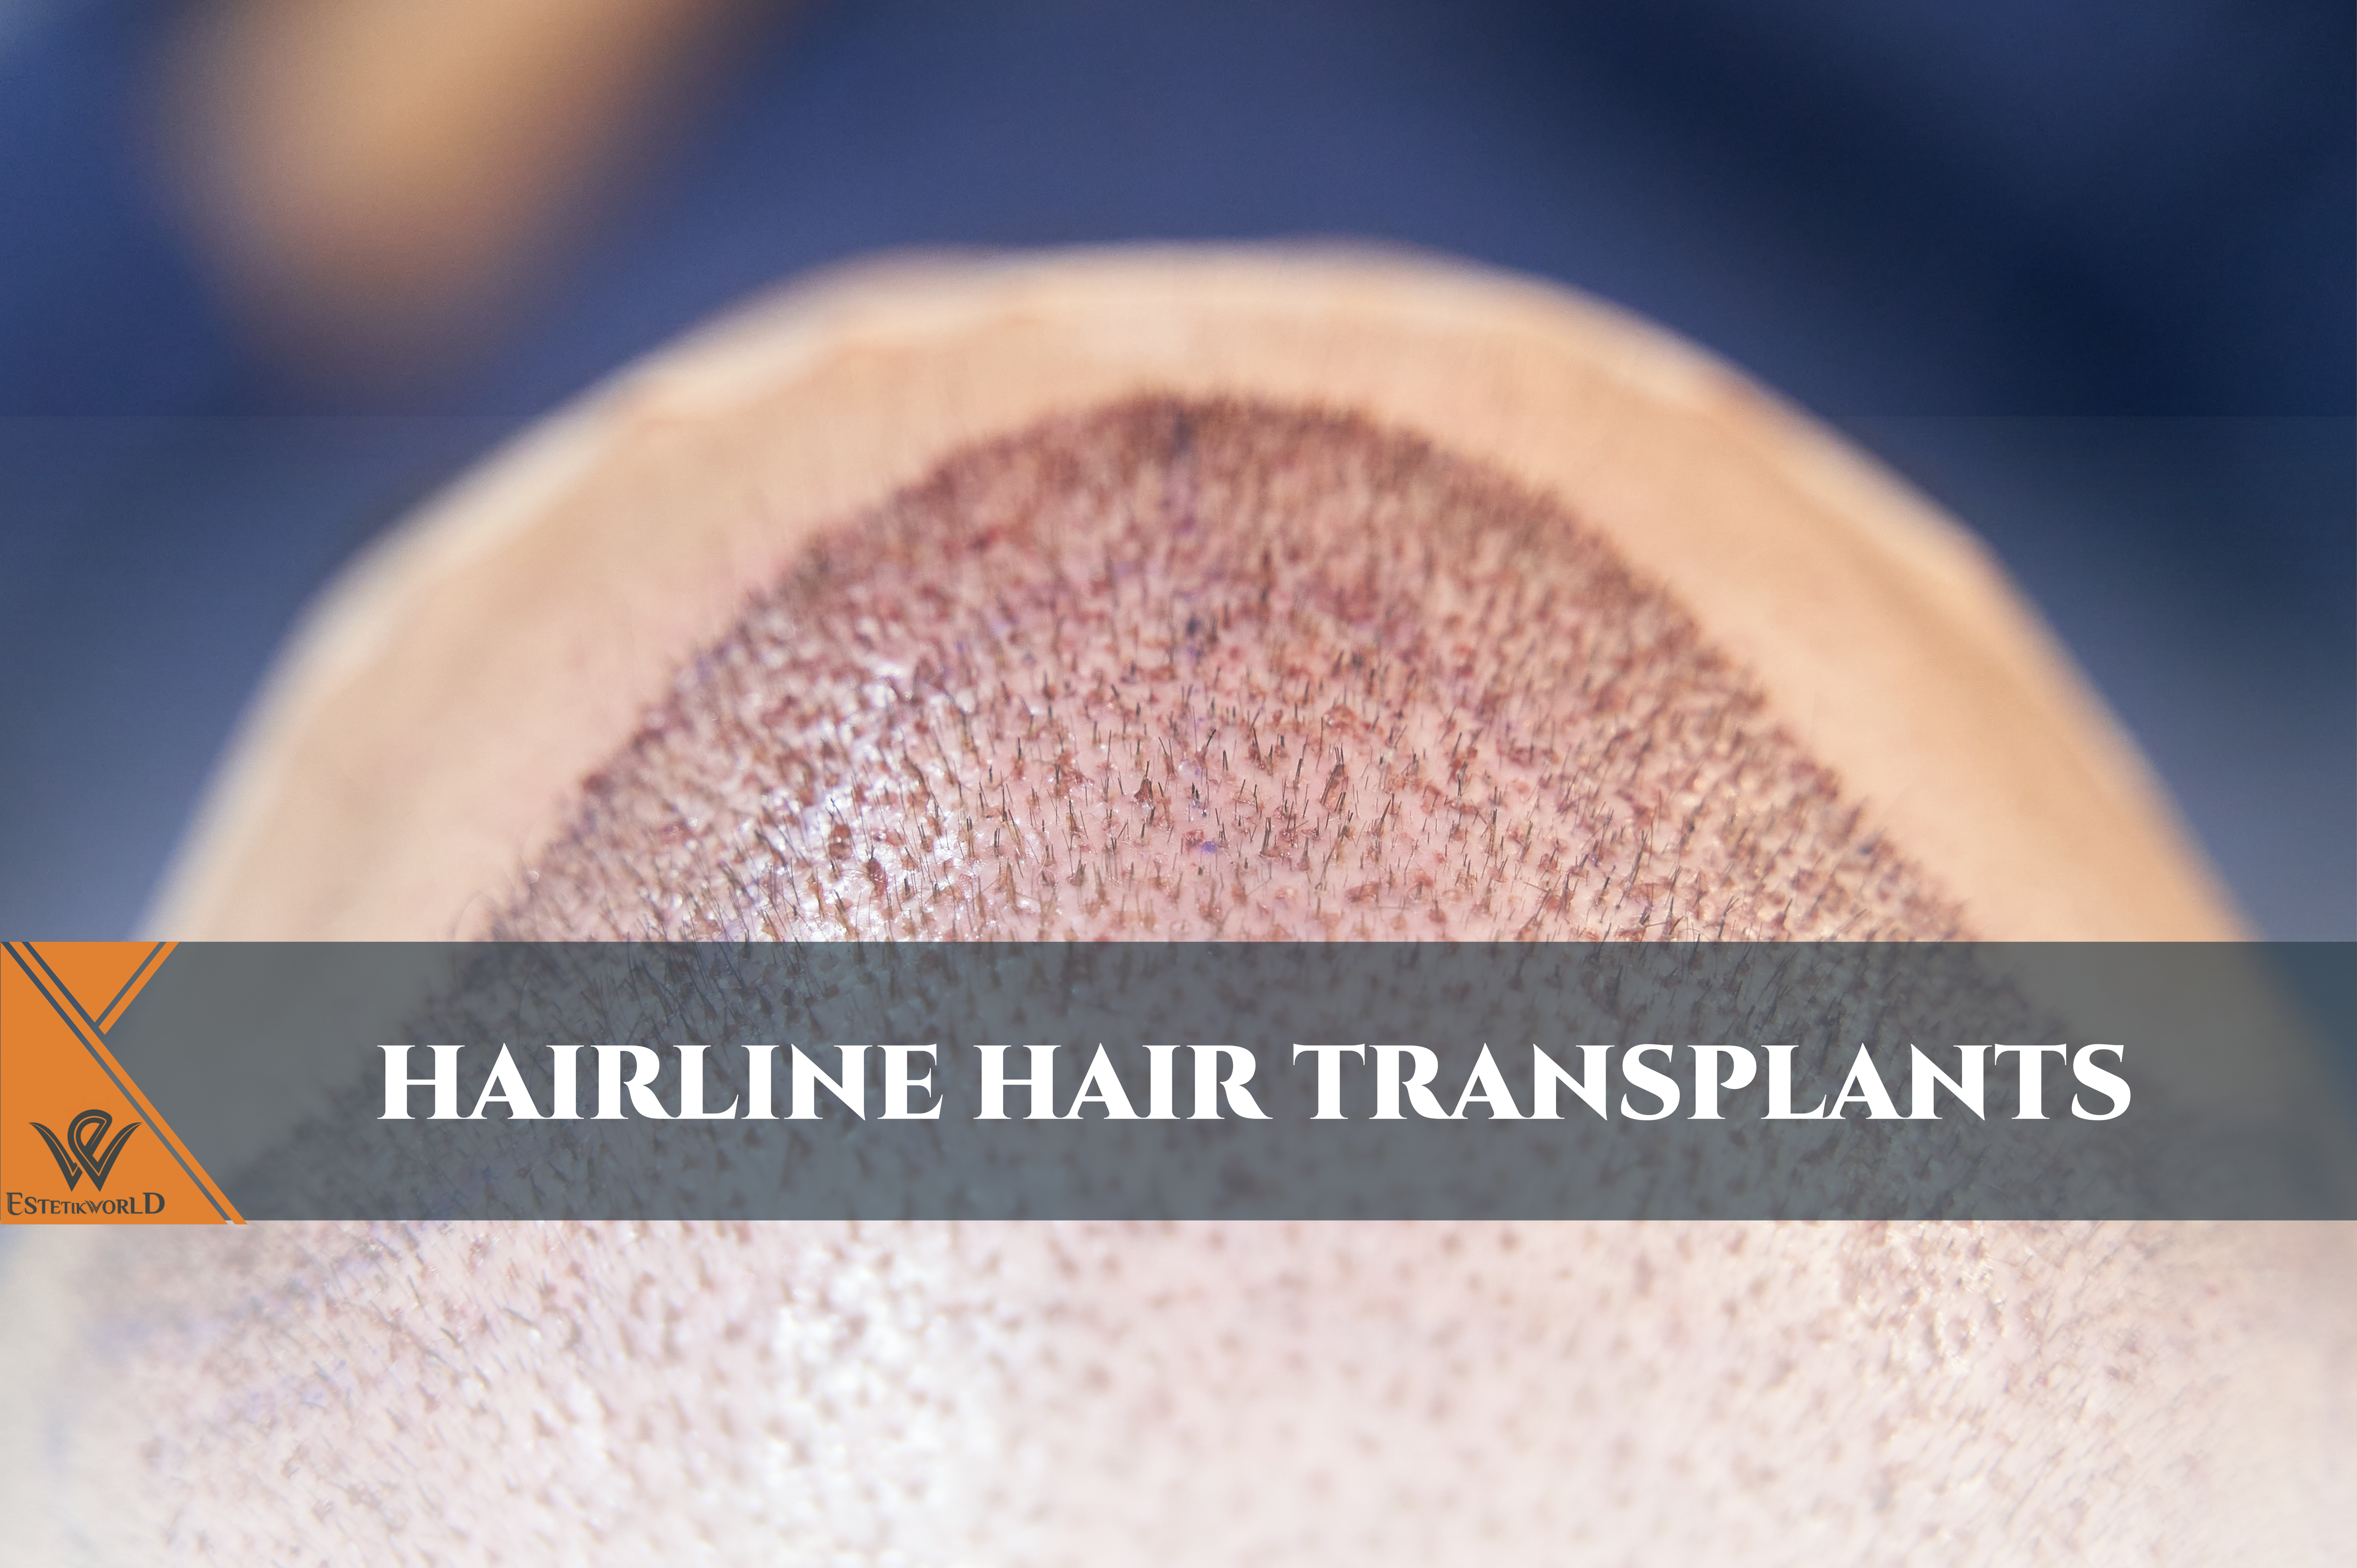 Hairline hair transplant